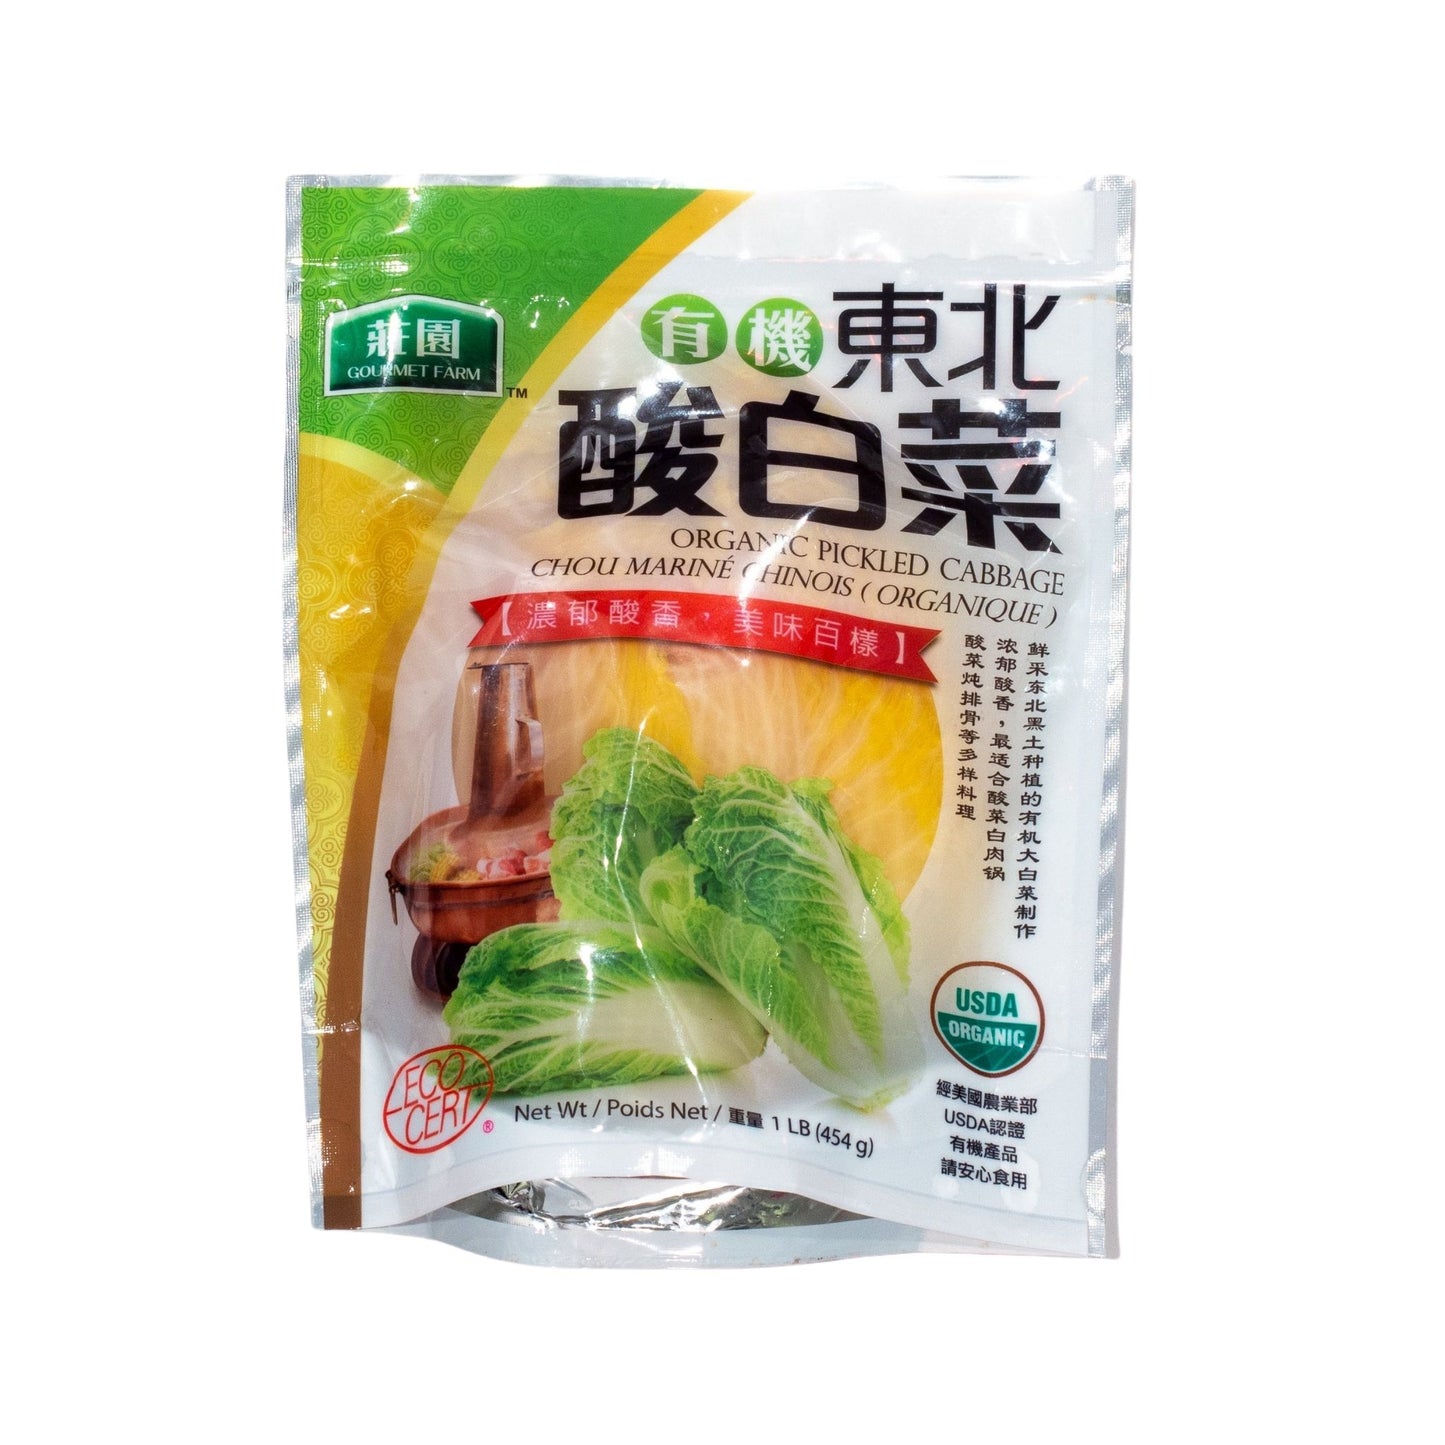 Organic Pickled Cabbage 东北酸白菜 (1 LB)